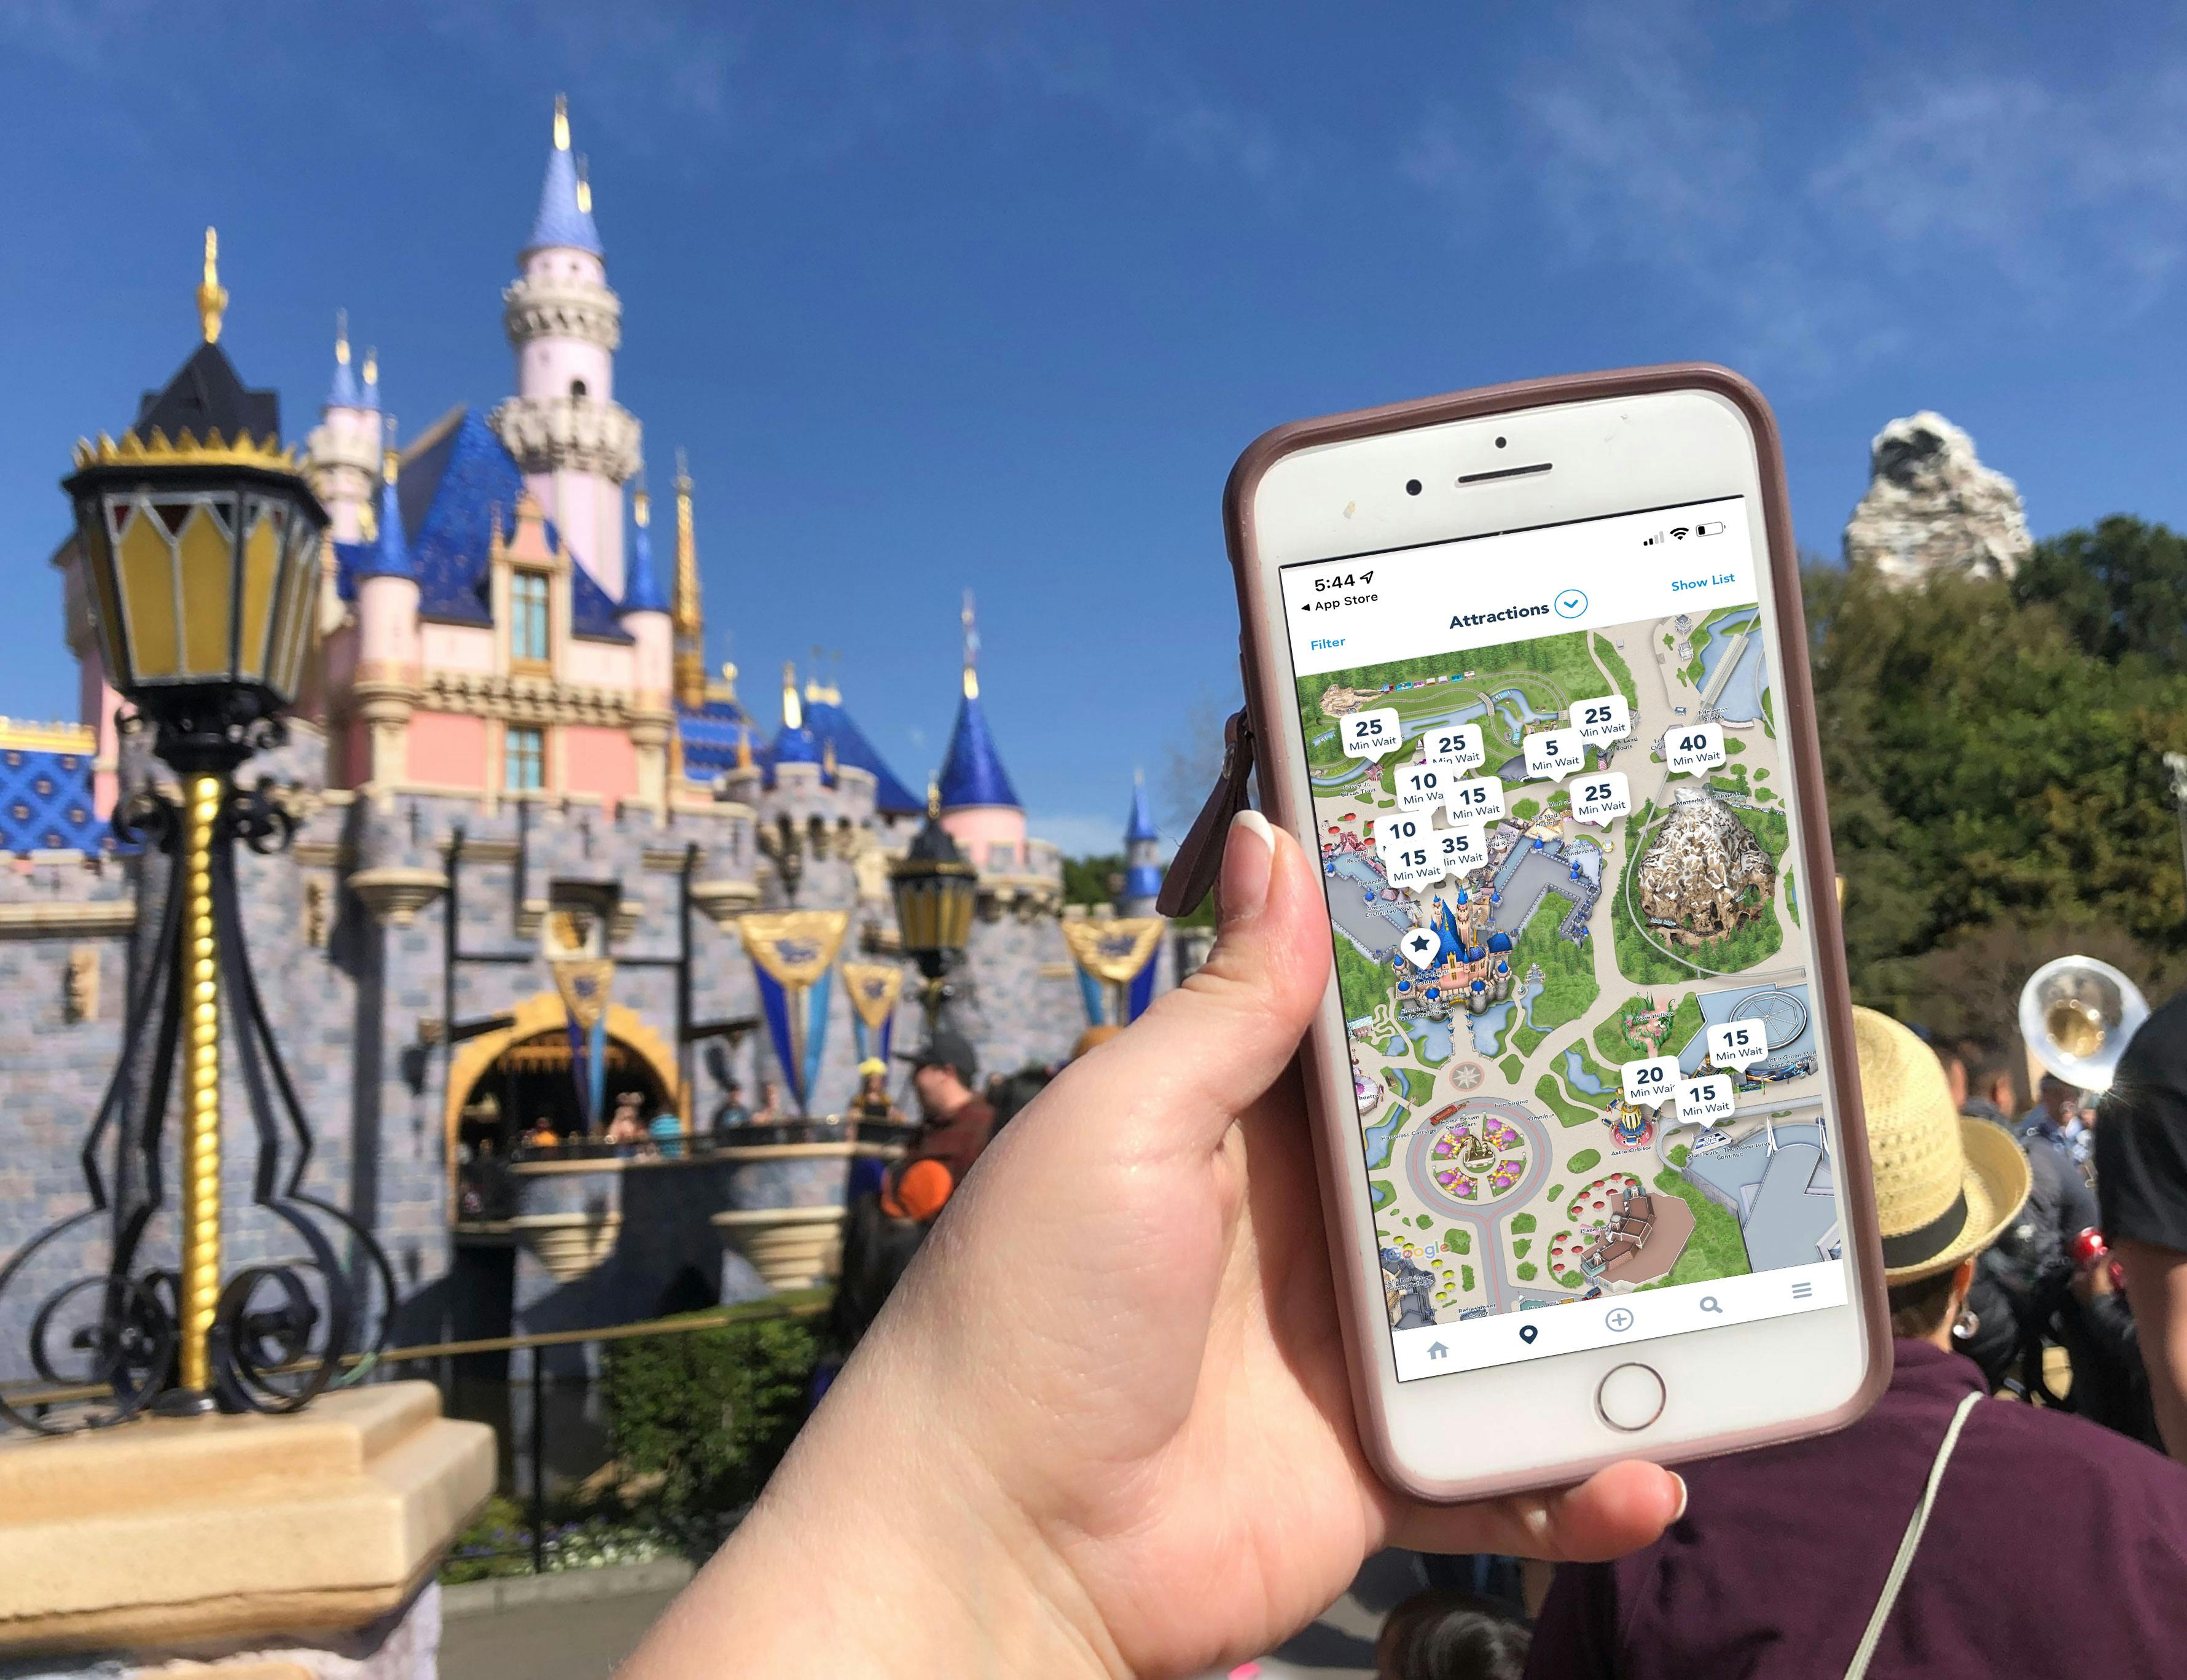 hand holding phone with Disneyland app wait times on map near Magic Kingdom